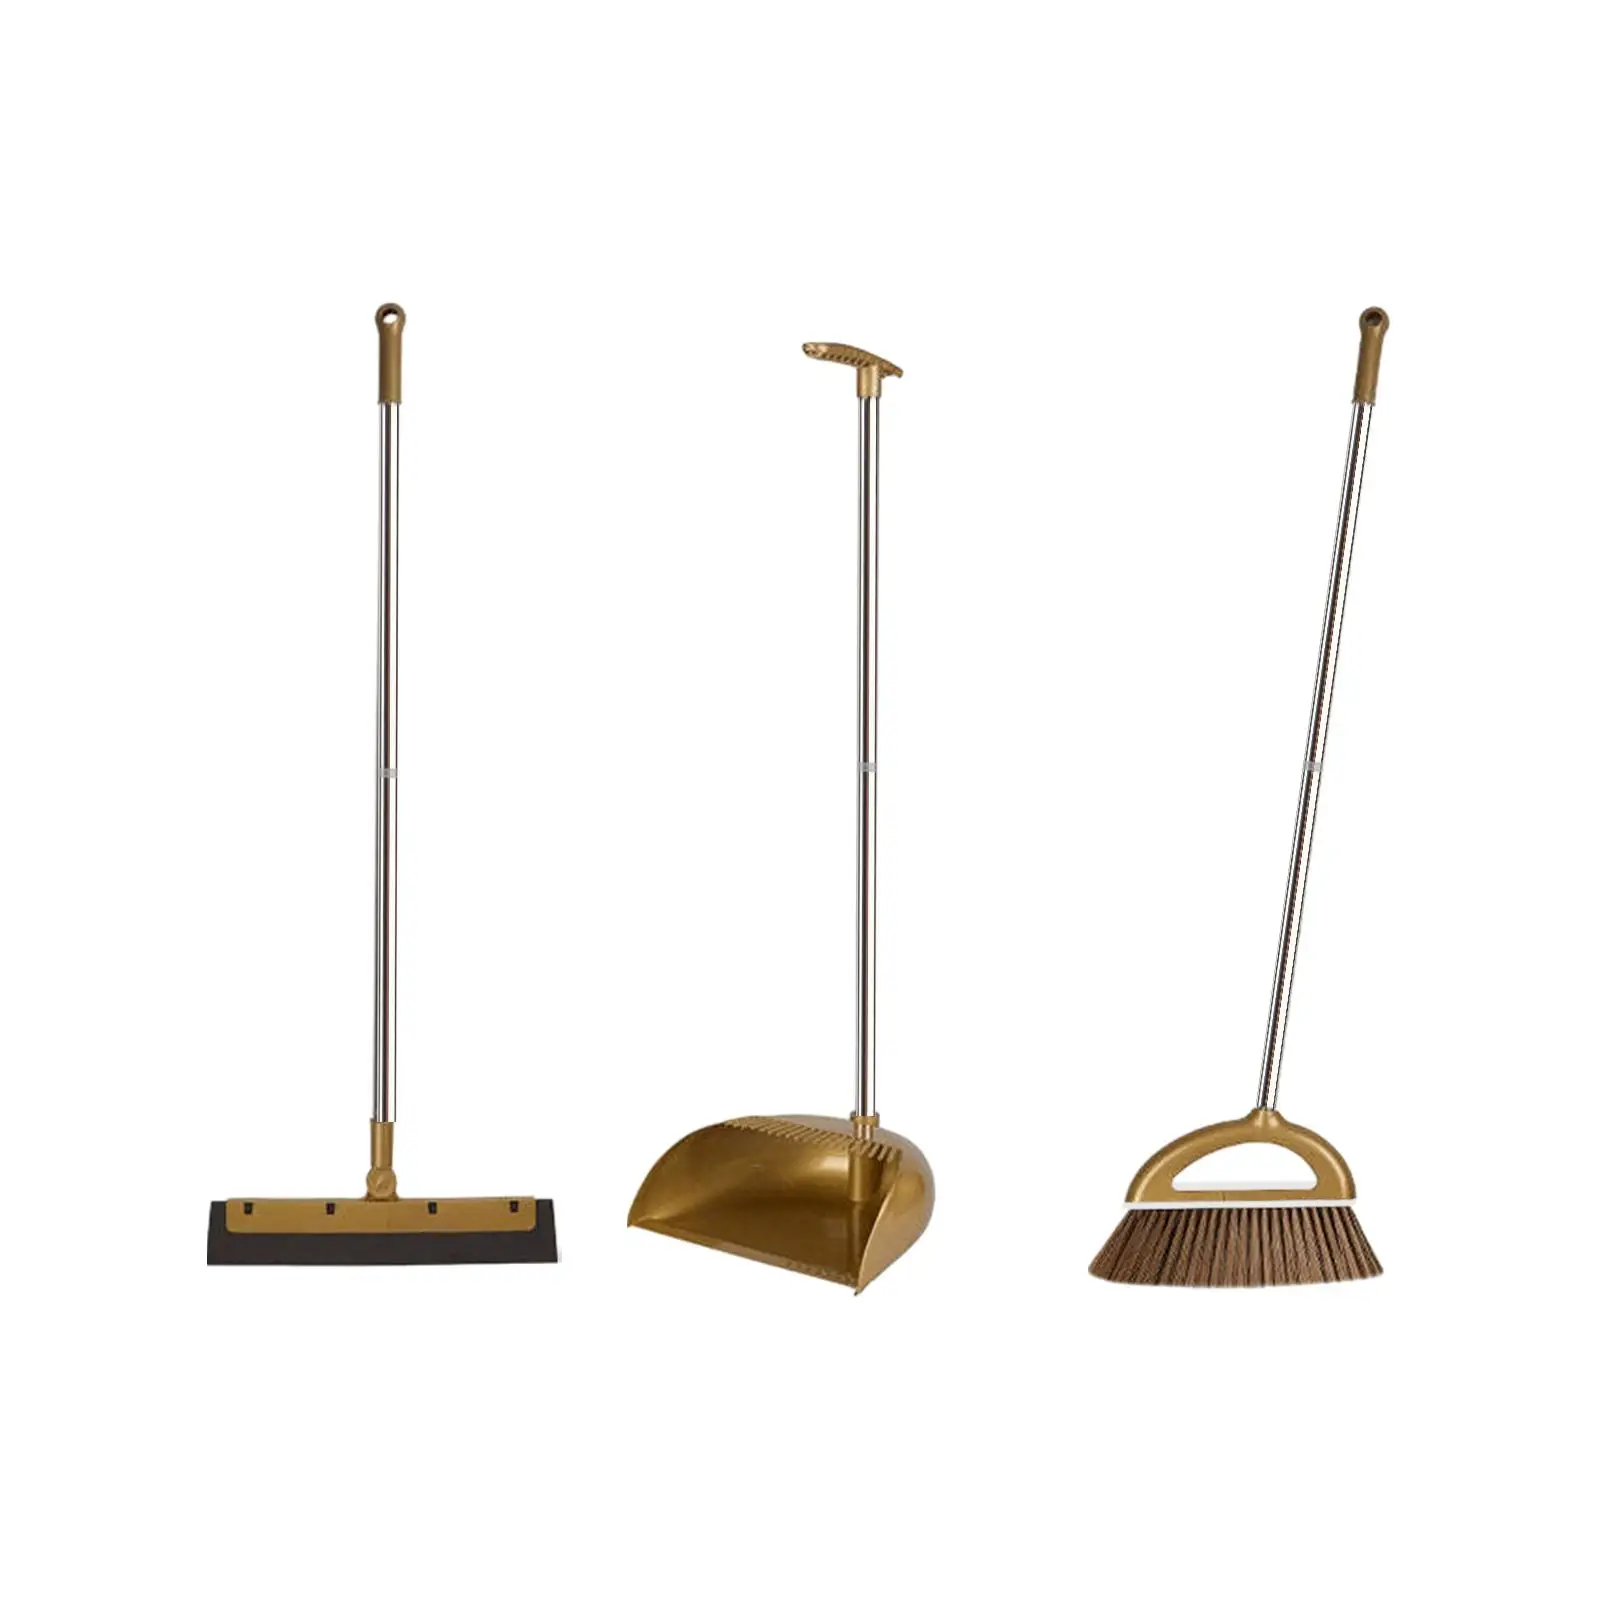 3 Pieces Broom and Dustpan Set Floor Wiper Foldable Broom Dust Pan for Outdoor Indoor Office Kitchen Cleaning Accessories